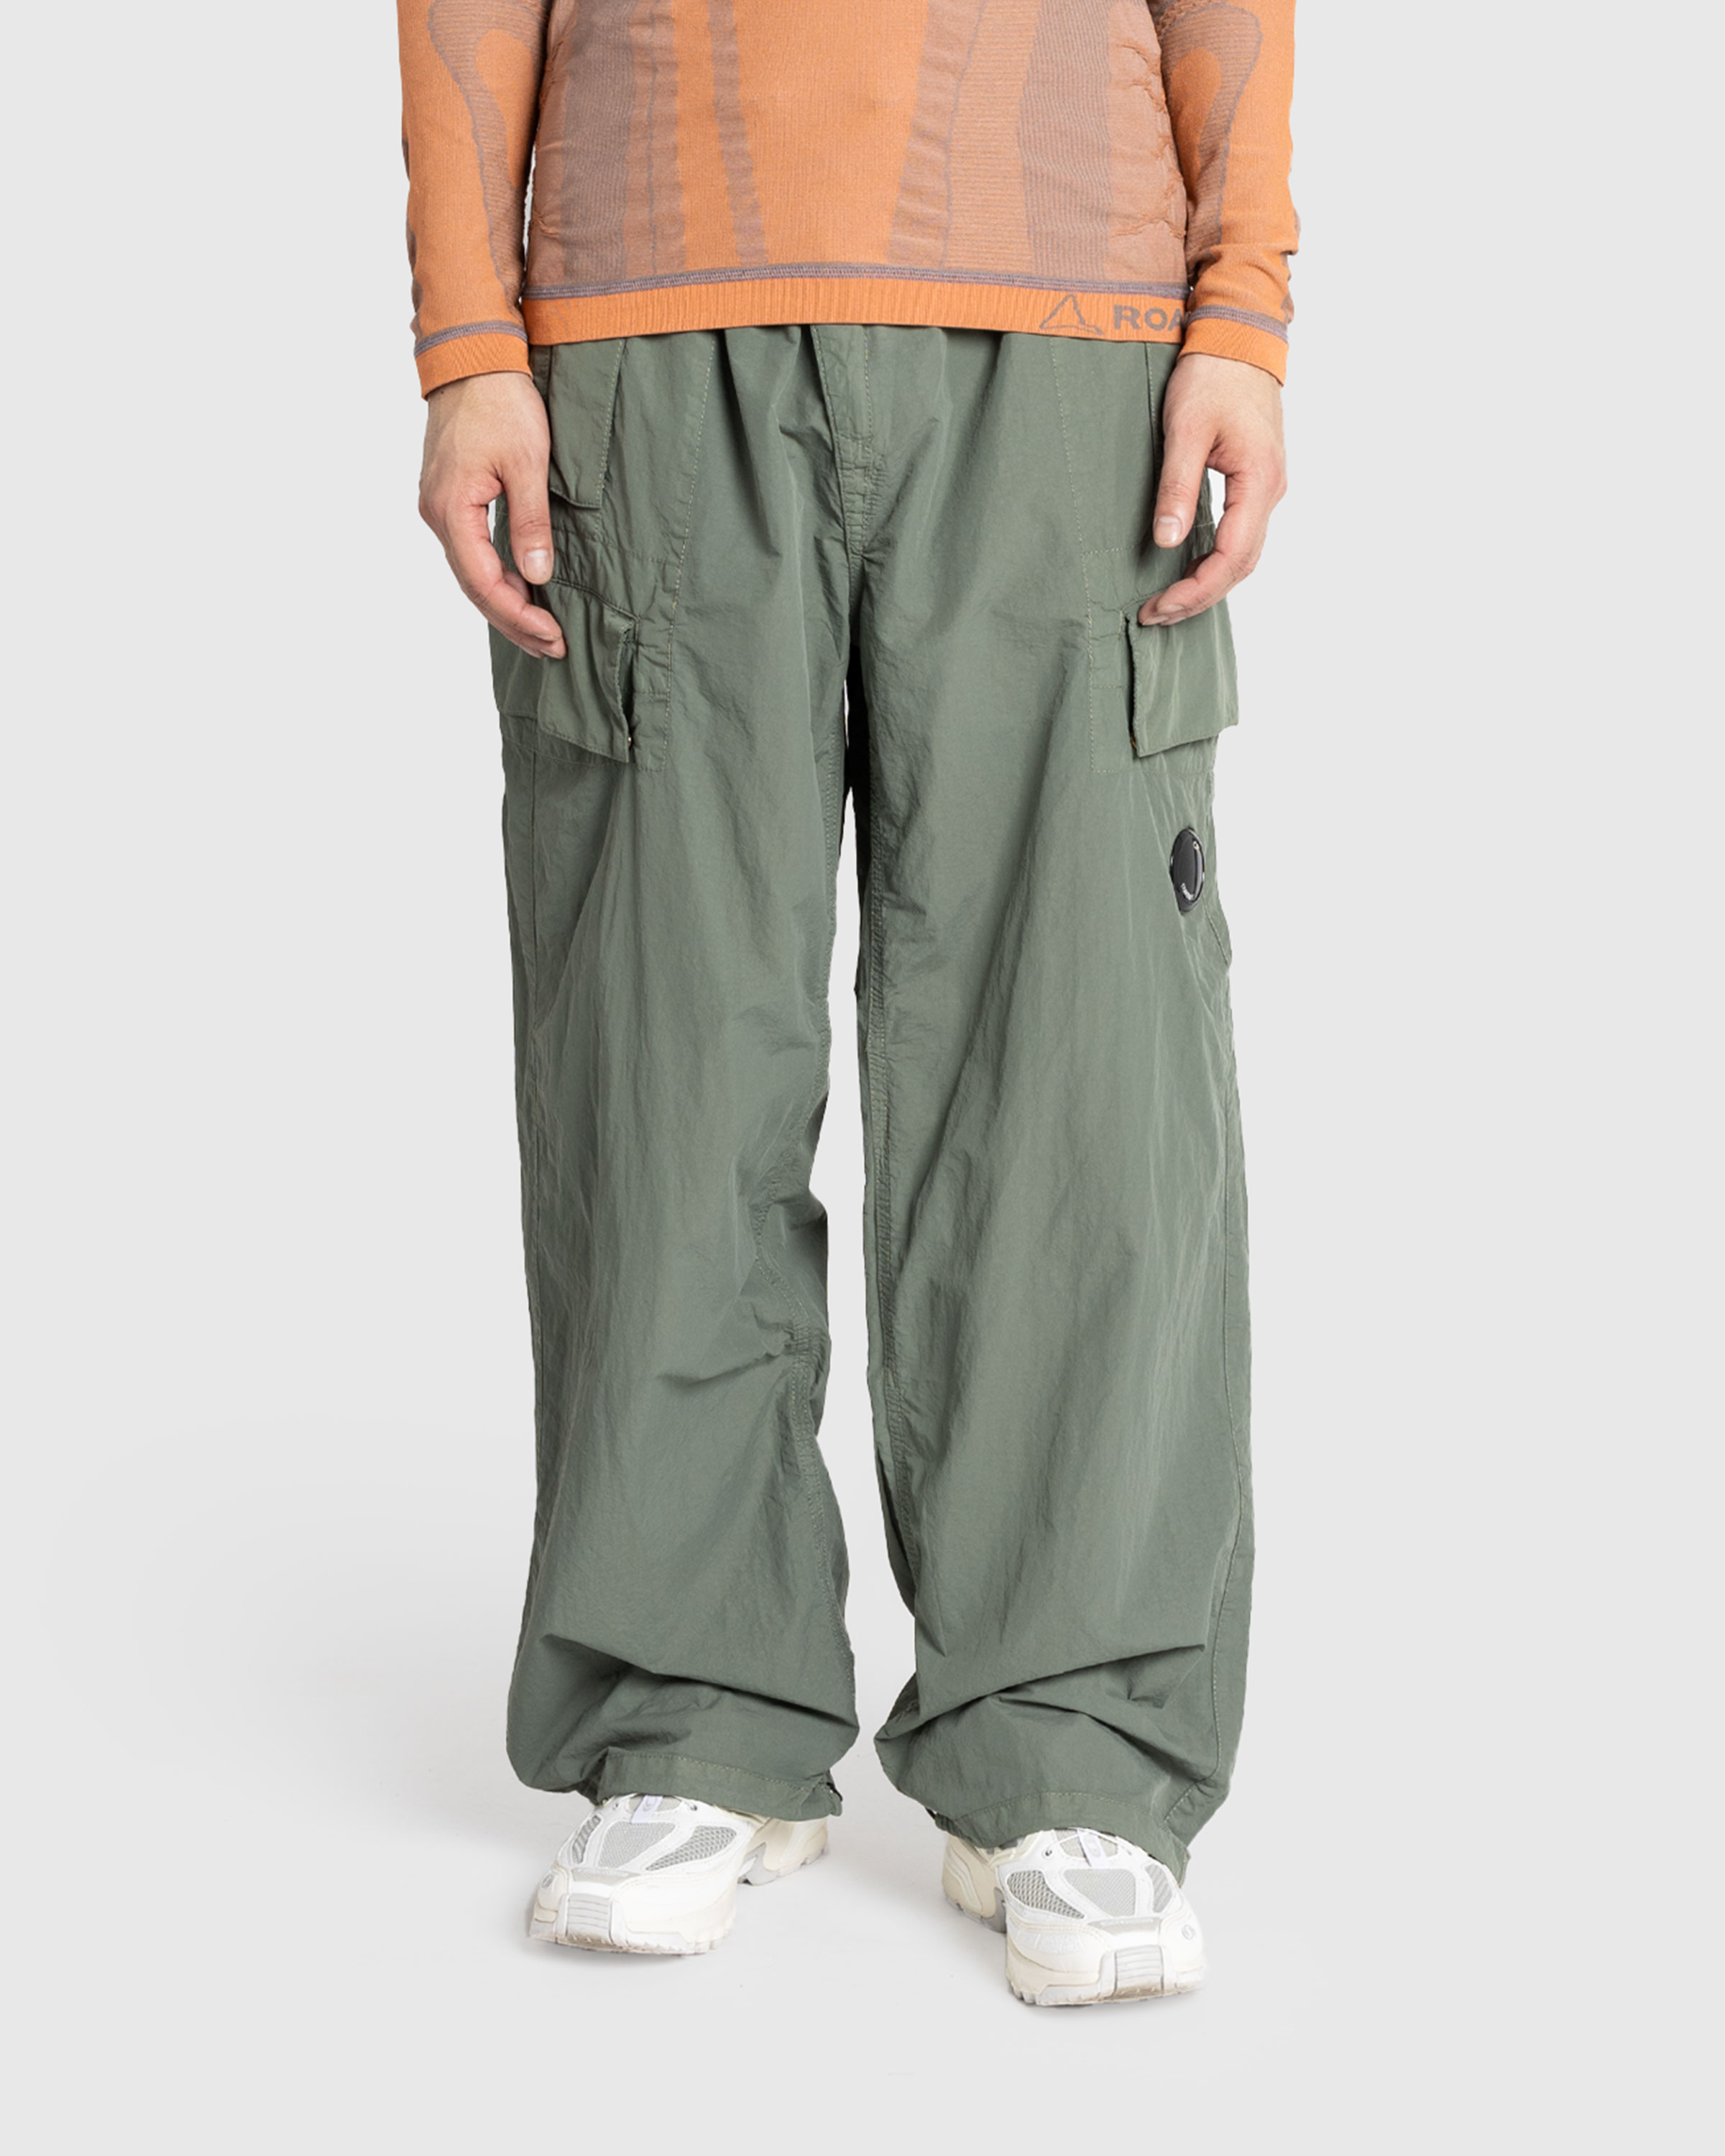 C.P. Company – Nylon Cargo Pants Agave Green - Pants - Green - Image 2